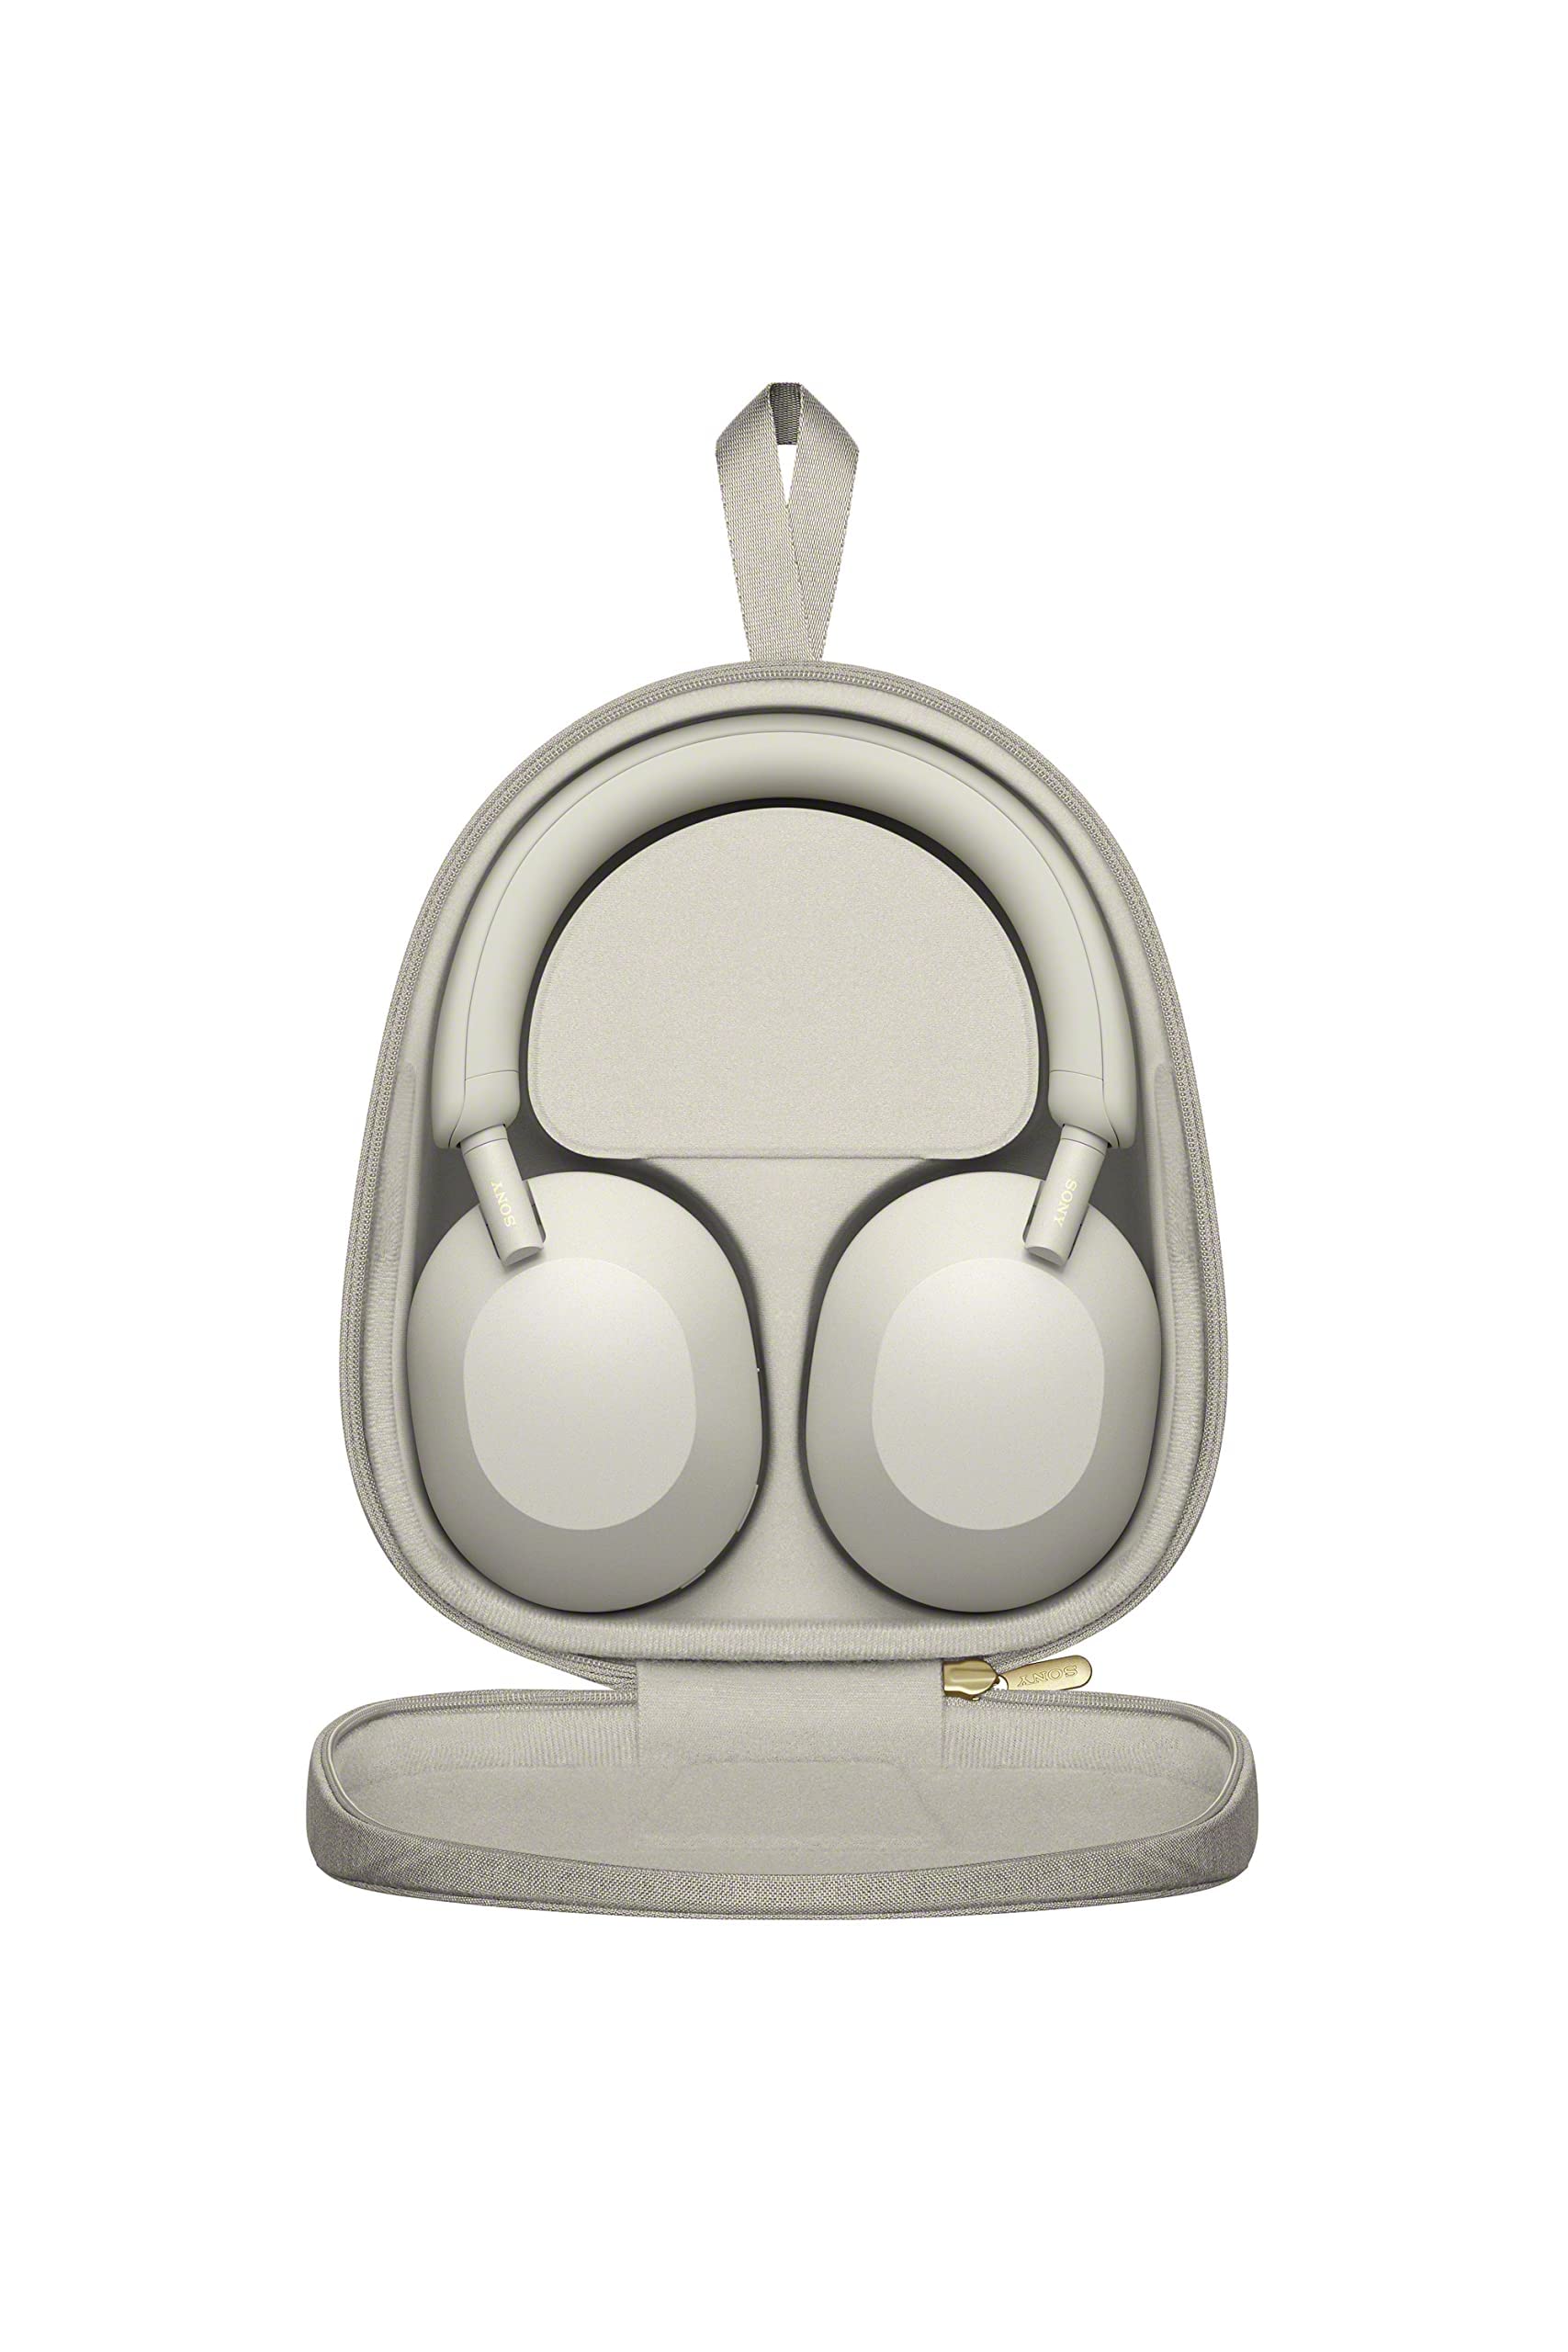 Sony WH-1000XM5/S Wireless Industry Leading Noise Canceling Bluetooth Headphones (Renewed)